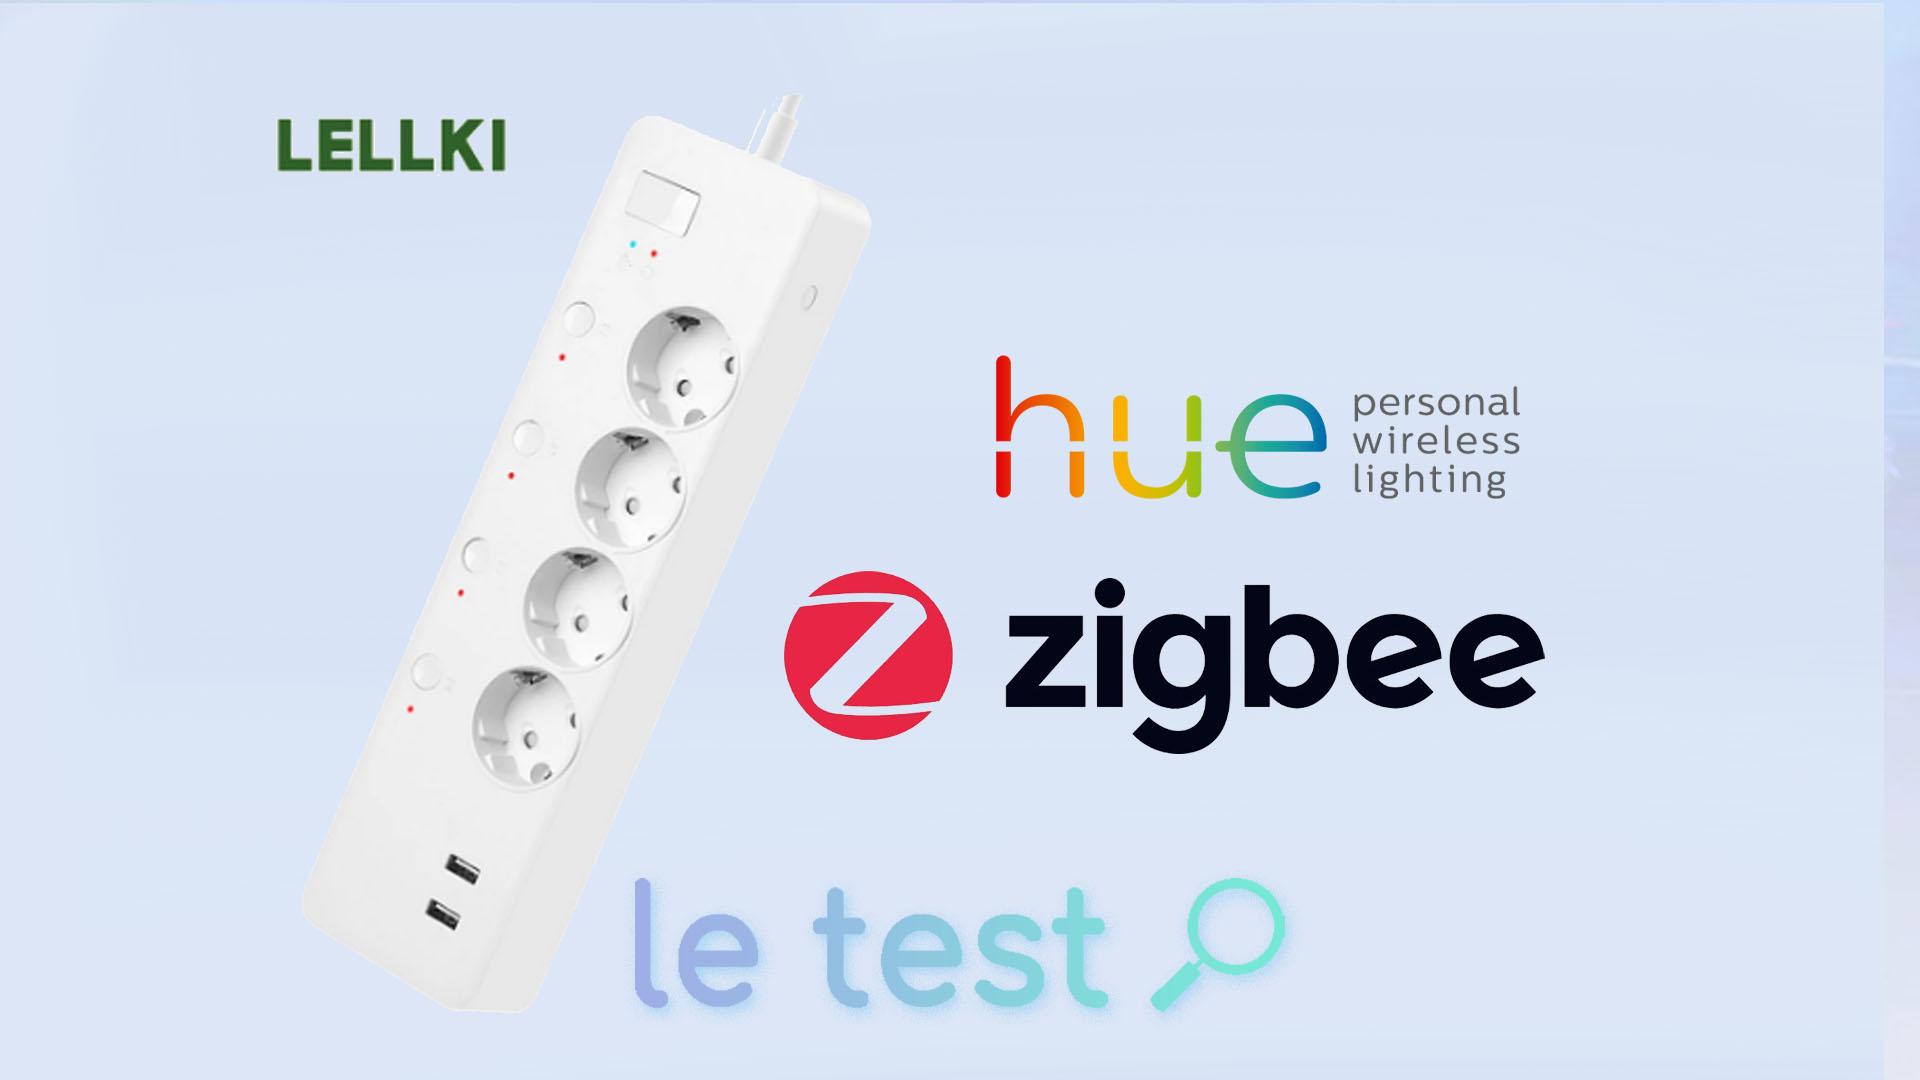 LELLKI - Multiprise connectée Zigbee 3.0 - 4 prises + 2 ports USB